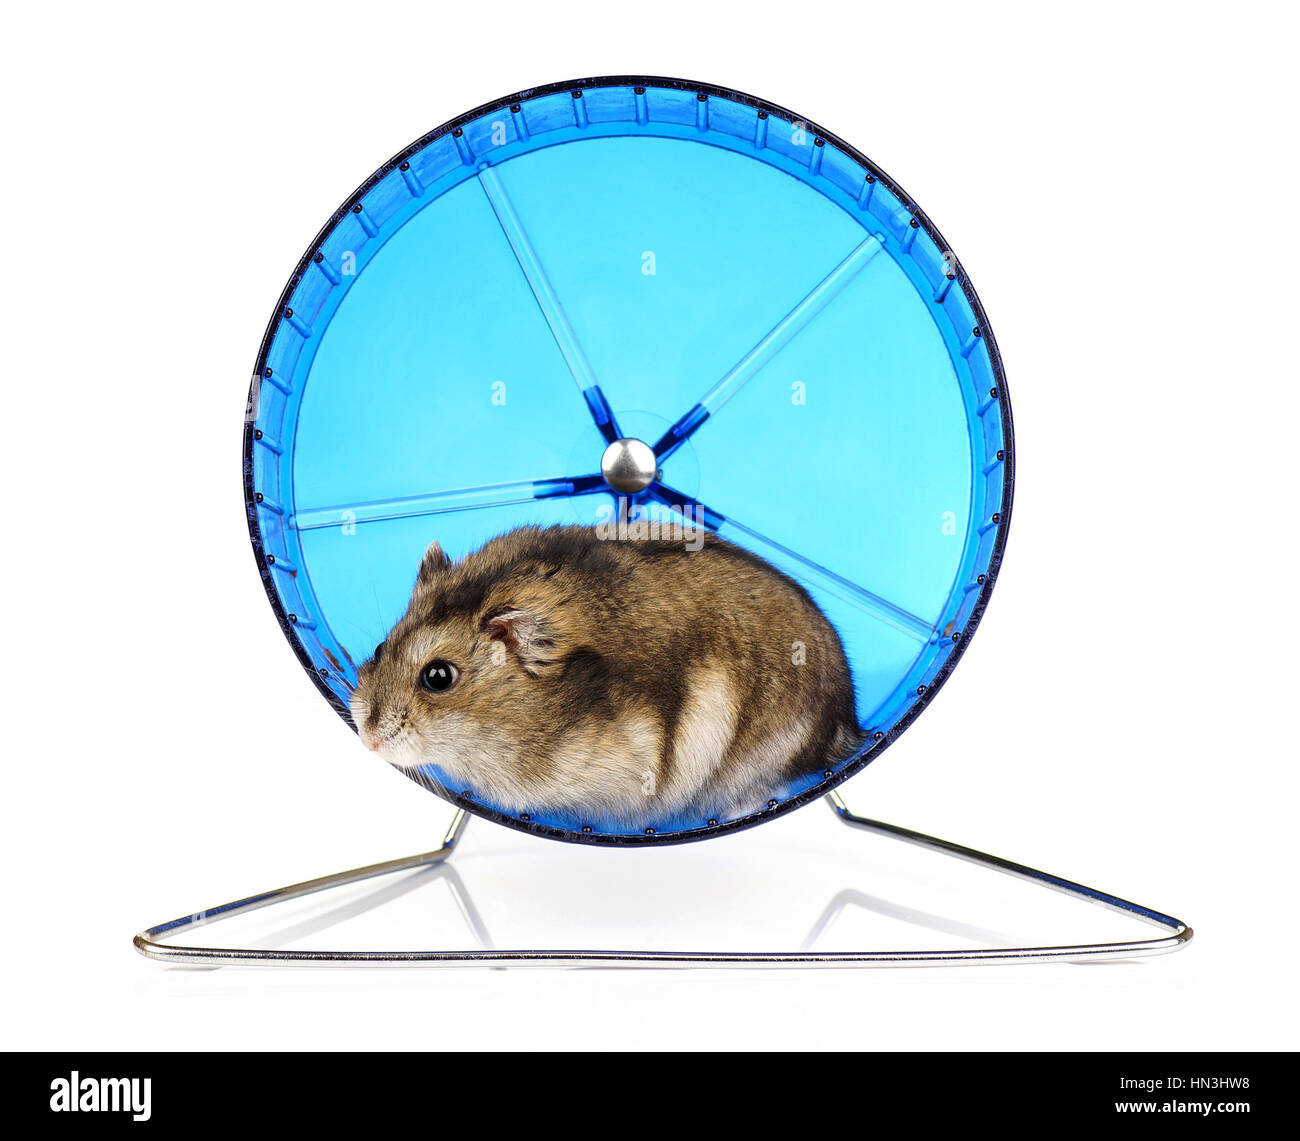 Dwarf Winter White Pet Hamster in Blue Exercise Wheel on White Background Stock Photo